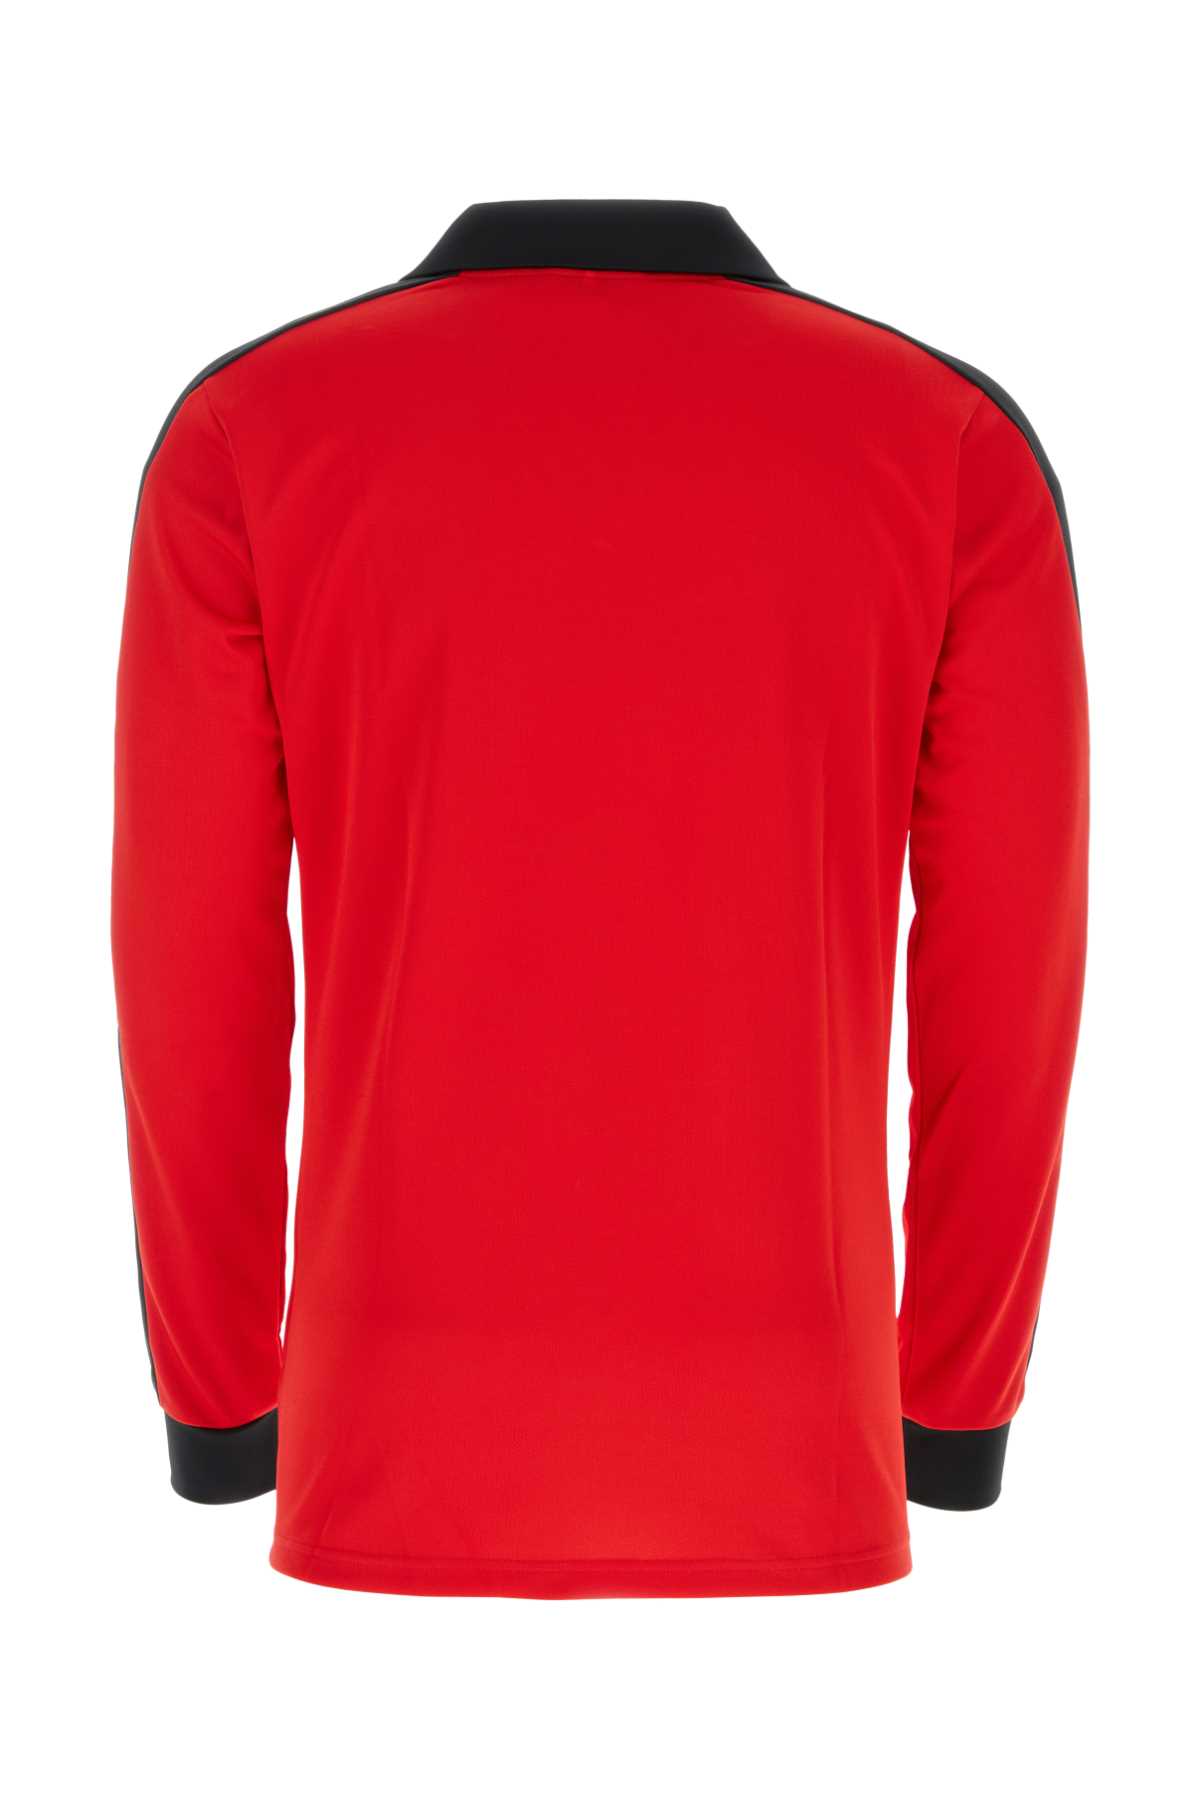 Wales Bonner Red Polyester Oversize T-shirt In Redandblack